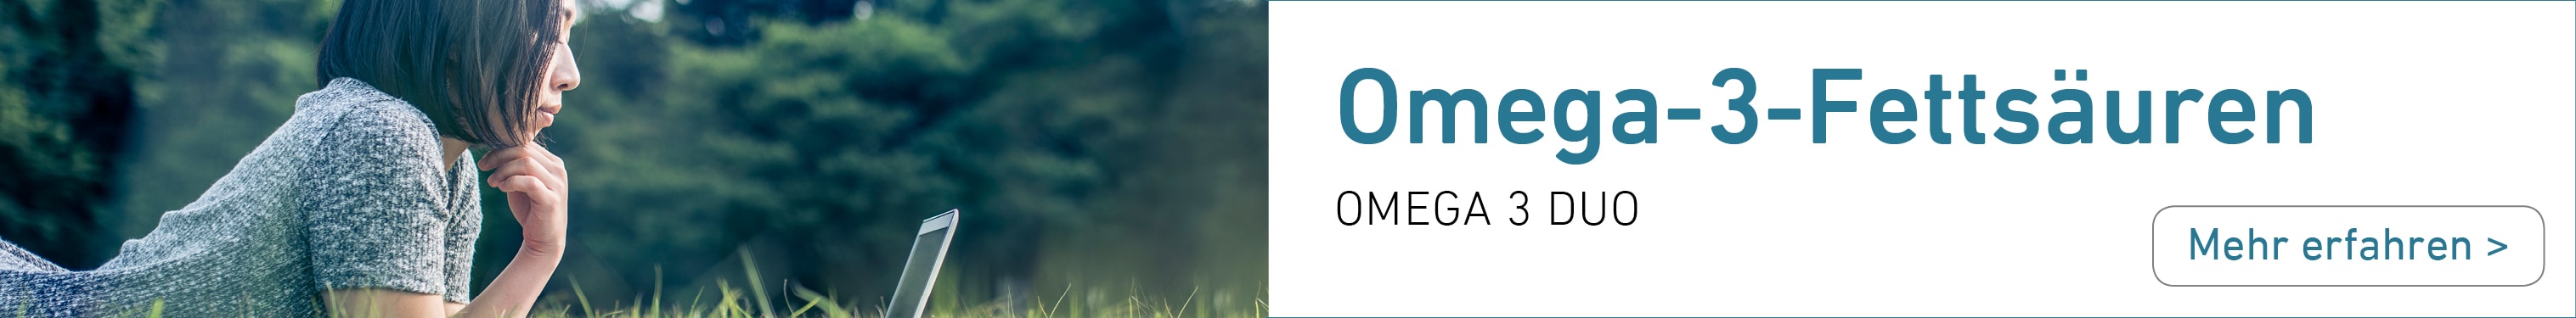 Omega-3 duo